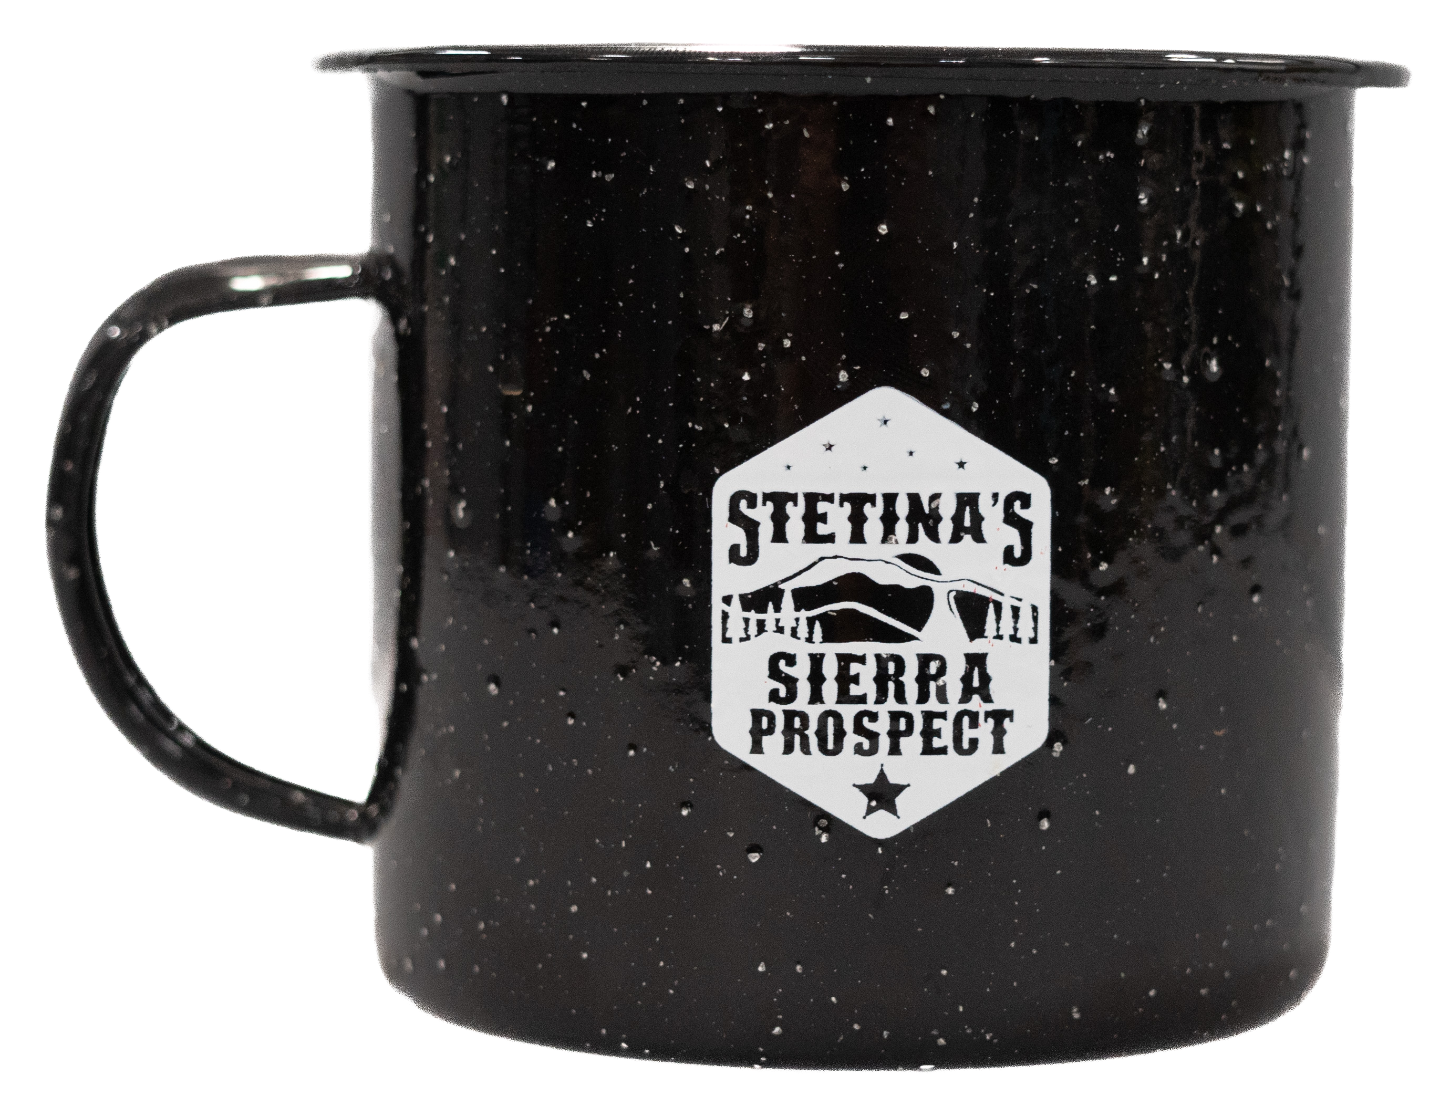 Stetina’s Camp Cup